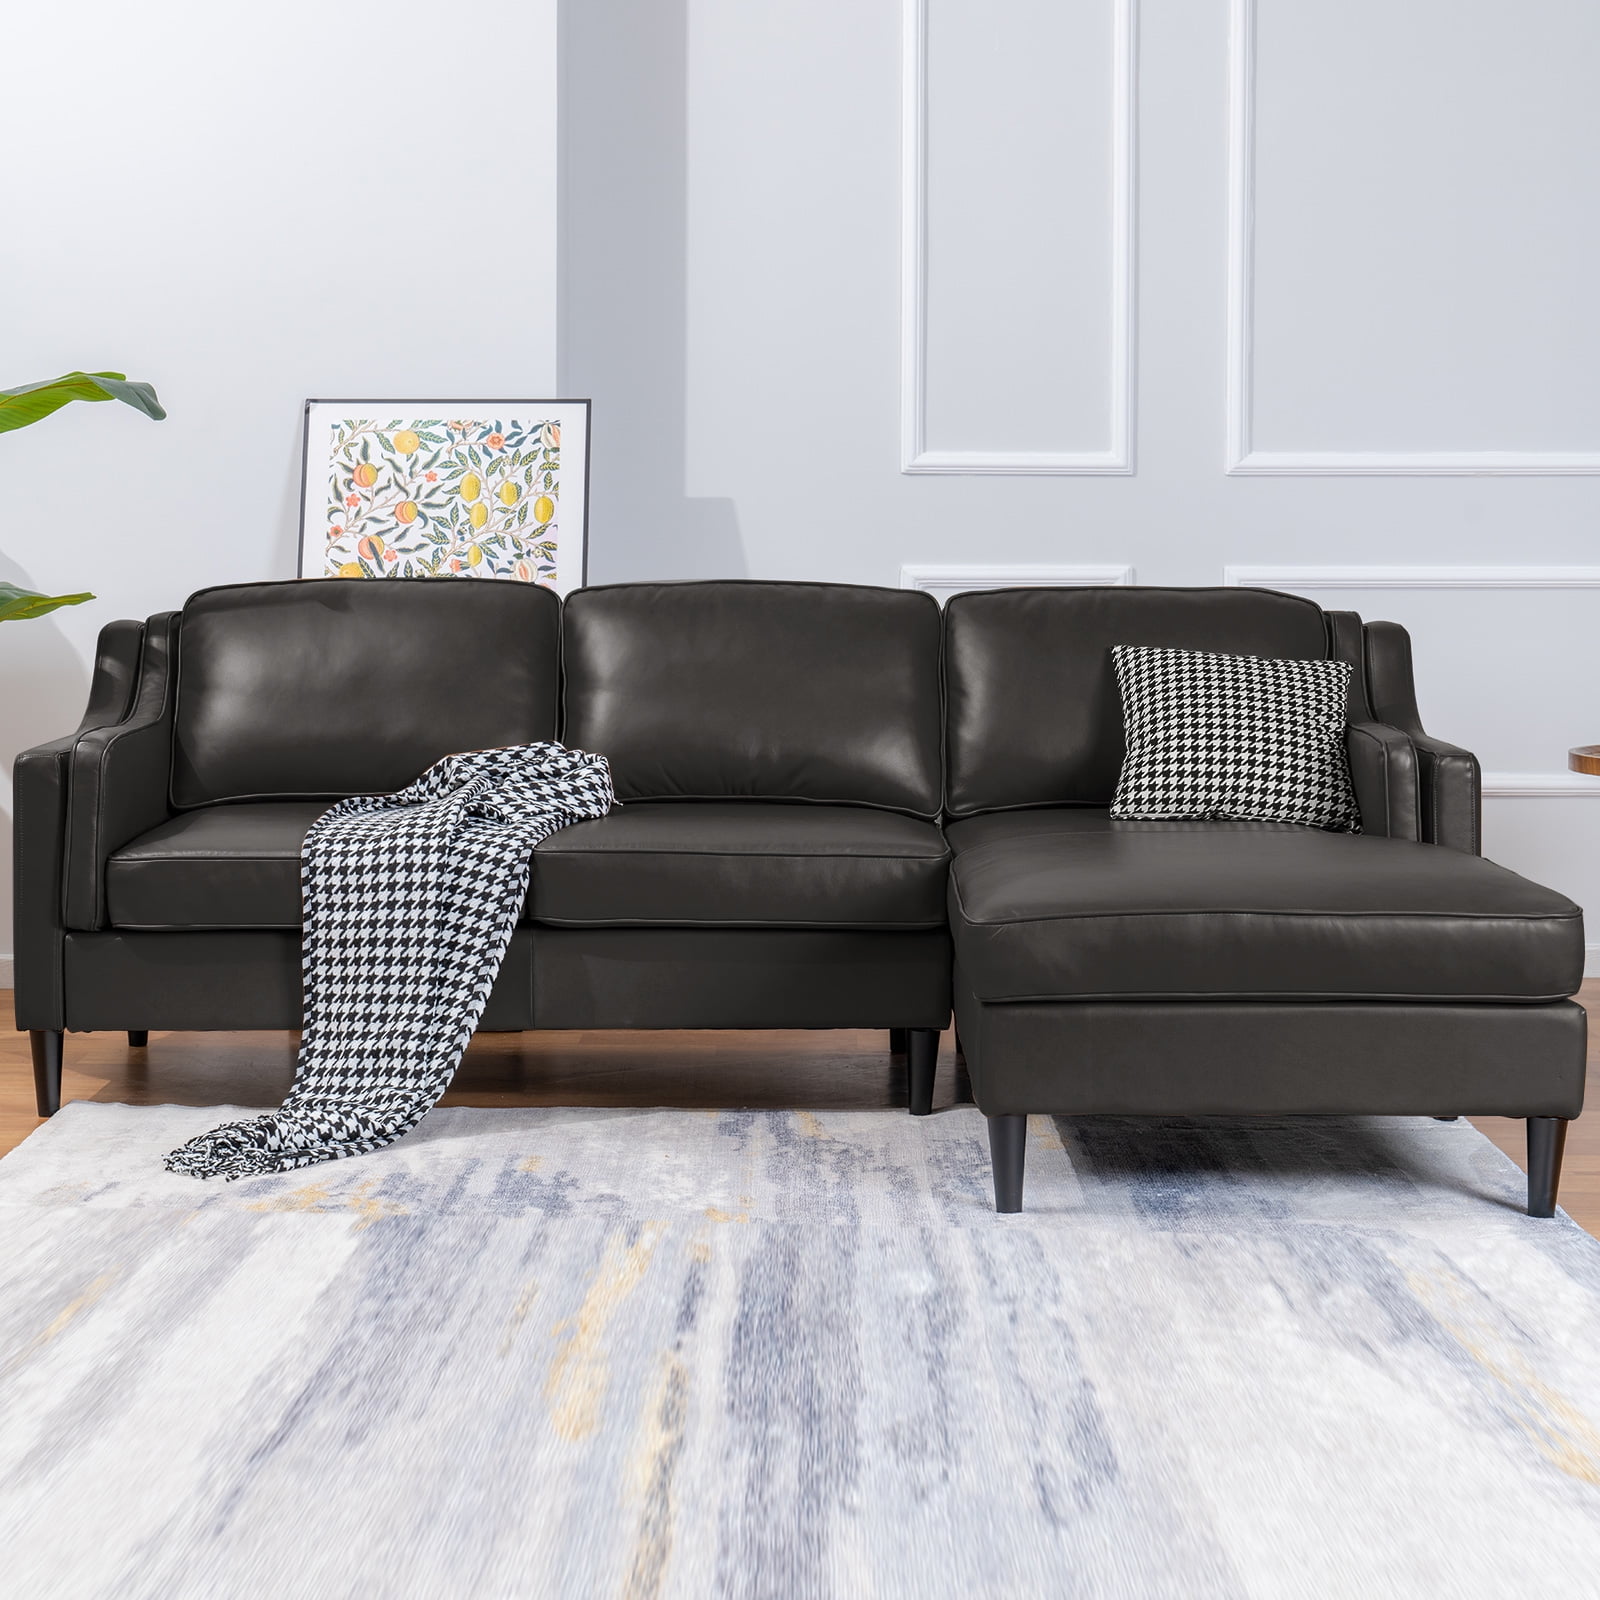 Mjkone Real Leather Sectional Sofa, Mordern Luxury Sofa Couch, Modular ...